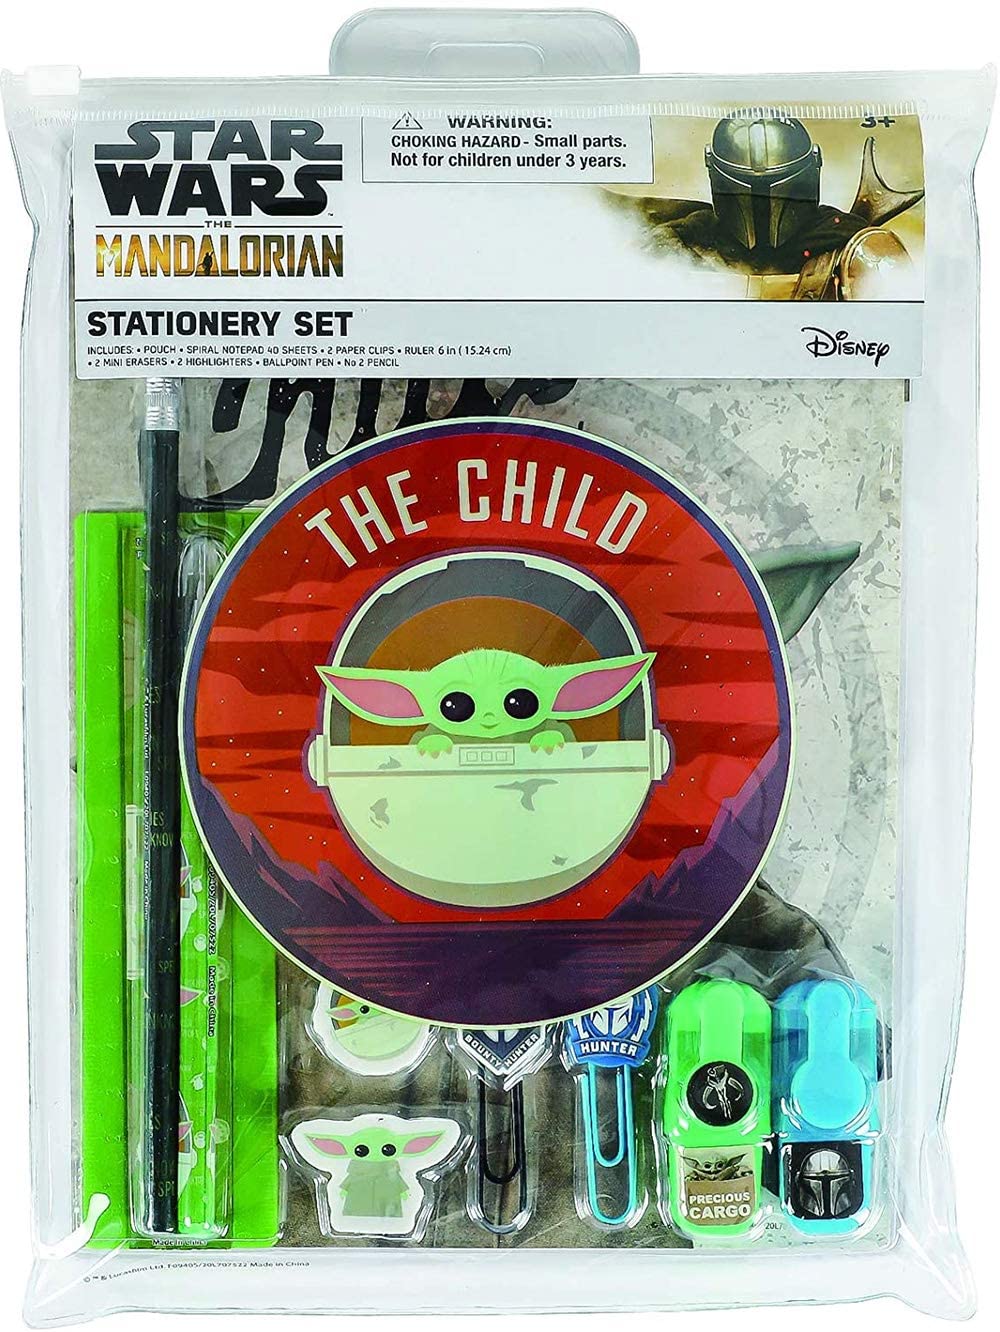 Star Wars The Mandalorian The Child Stationery Set